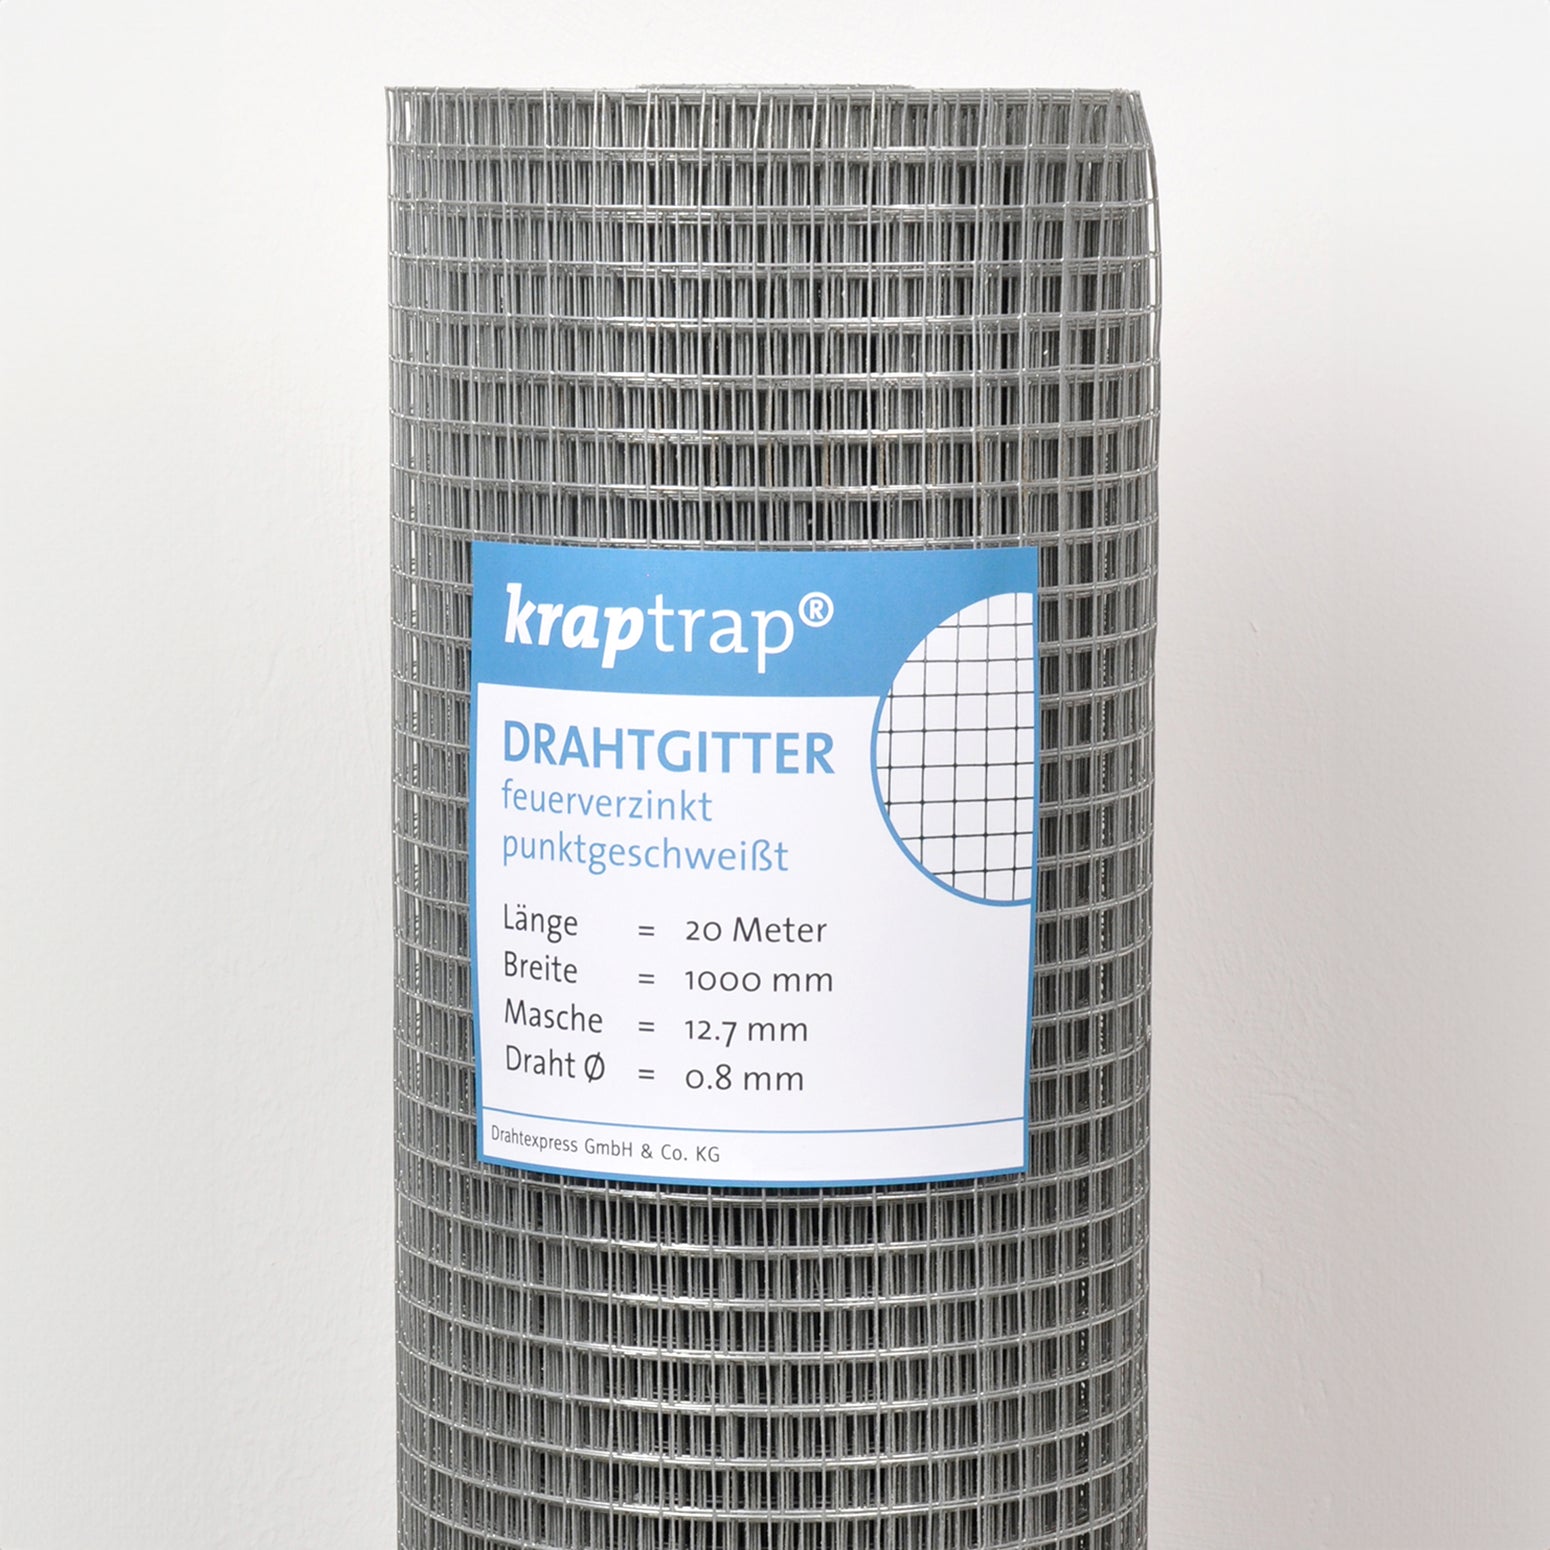 Kraptrap® feuerverzinktes Drahtgitter 12 x 12 mm mit 0,8 mm Stärke